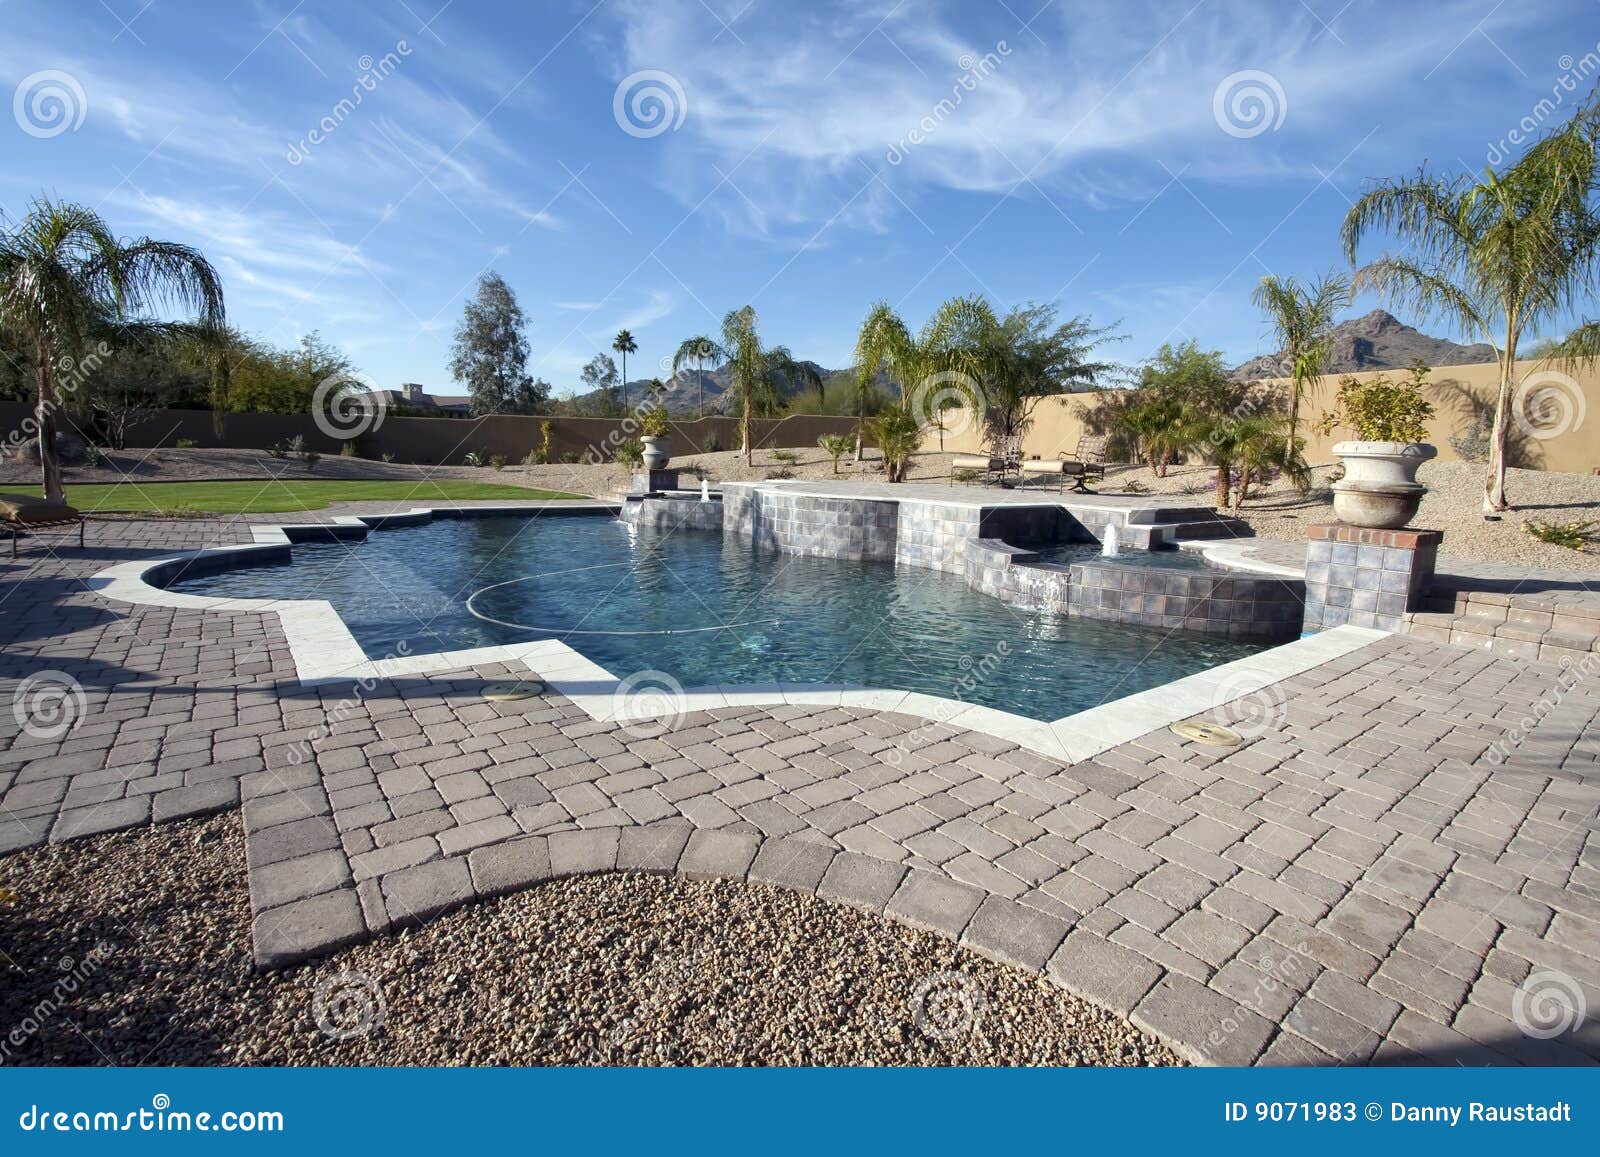 arizona mansion pool and patio